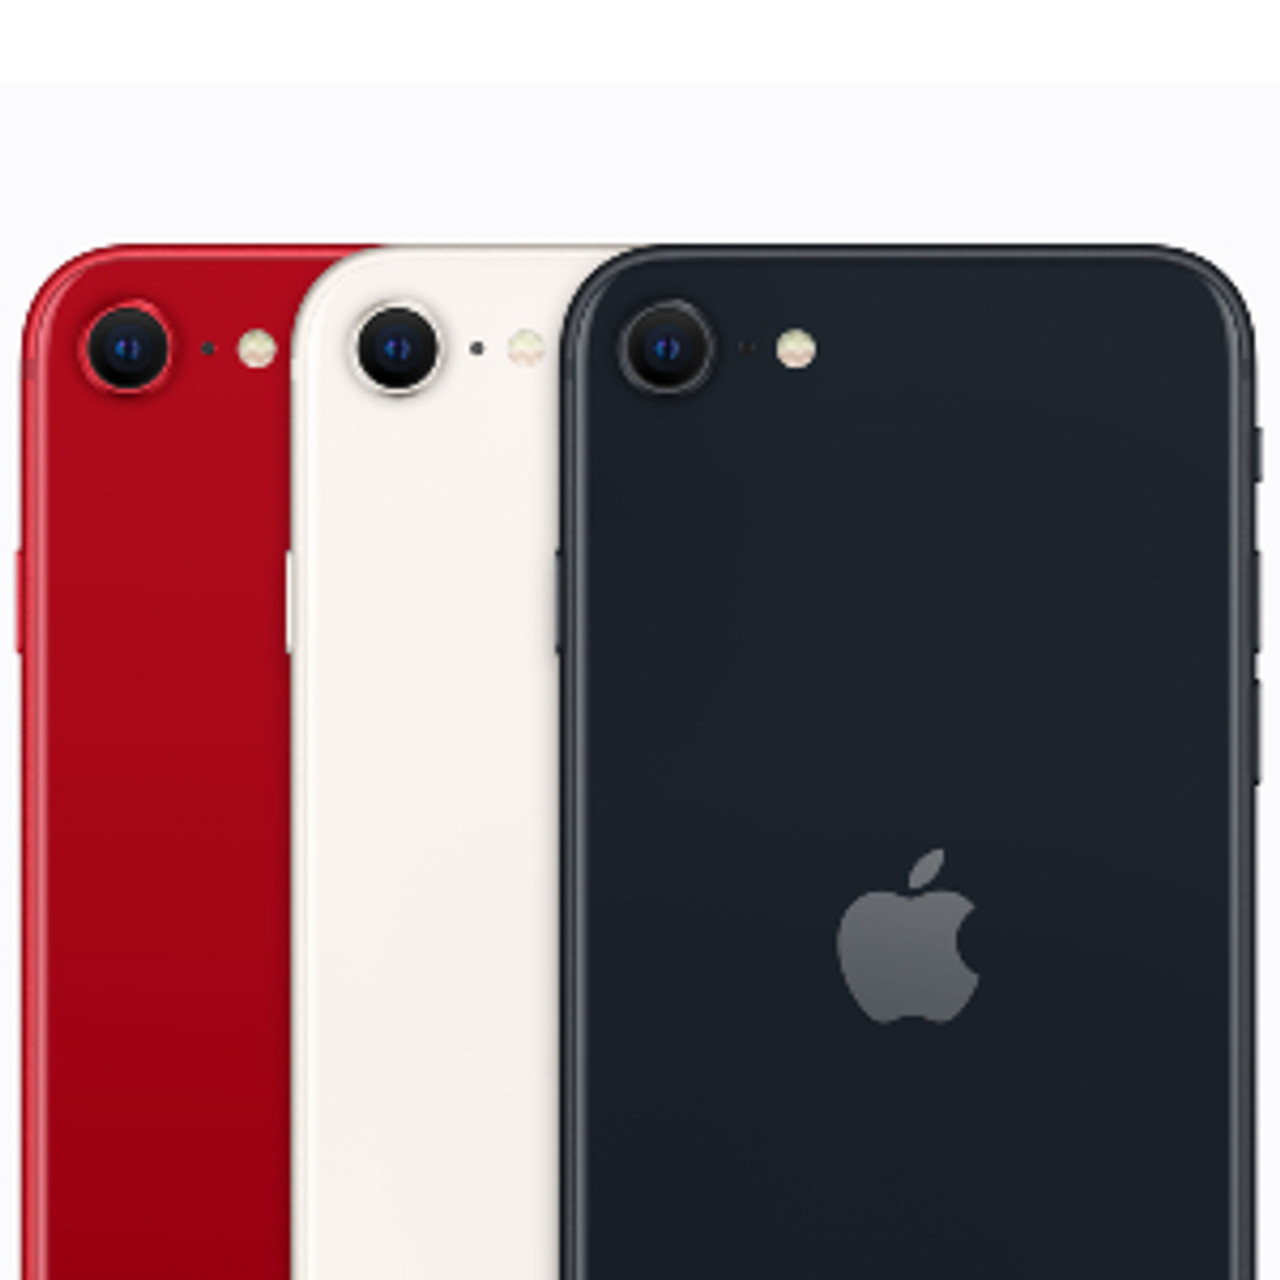 Apple iPhone SE 3 (128GB) Unlocked/ATu0026T/Verizon/T-Mobile - Mac Me an Offer